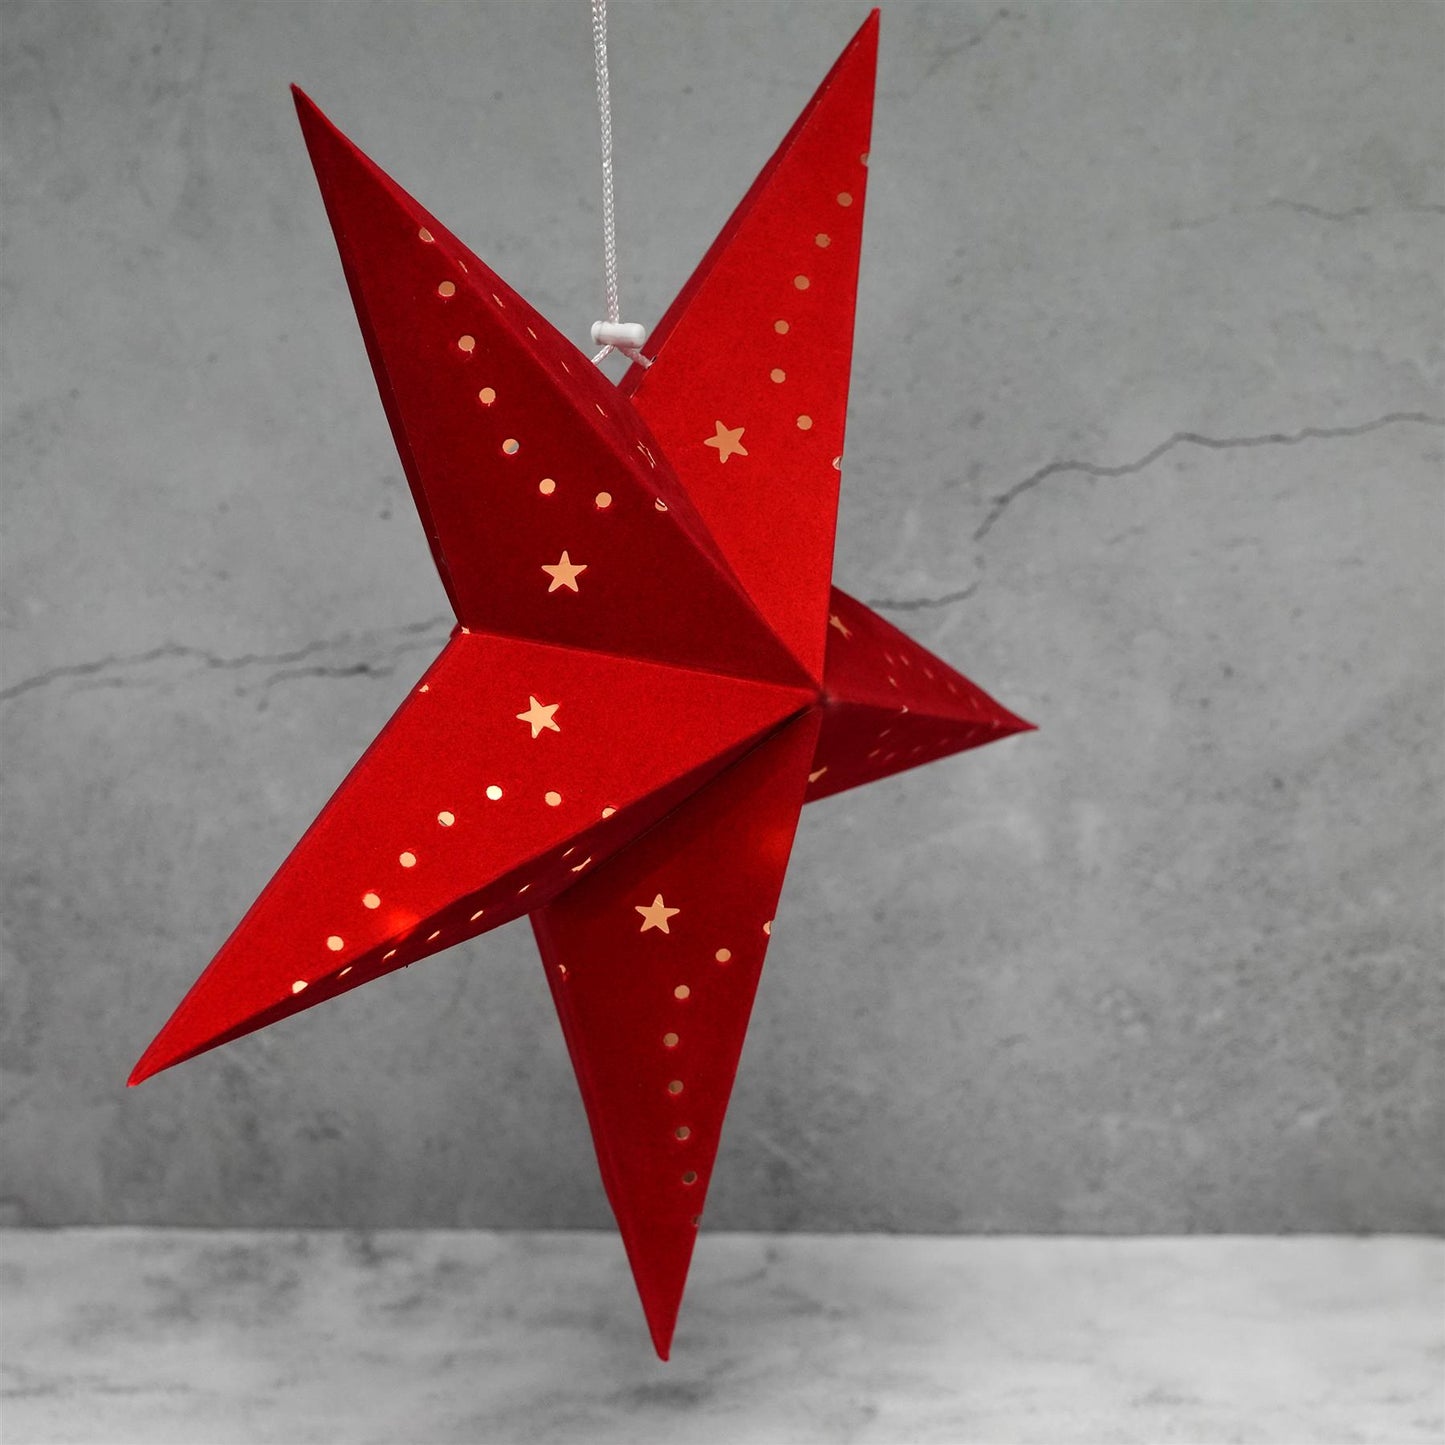 45 cm Red Velvet Star by Geezy - UKBuyZone